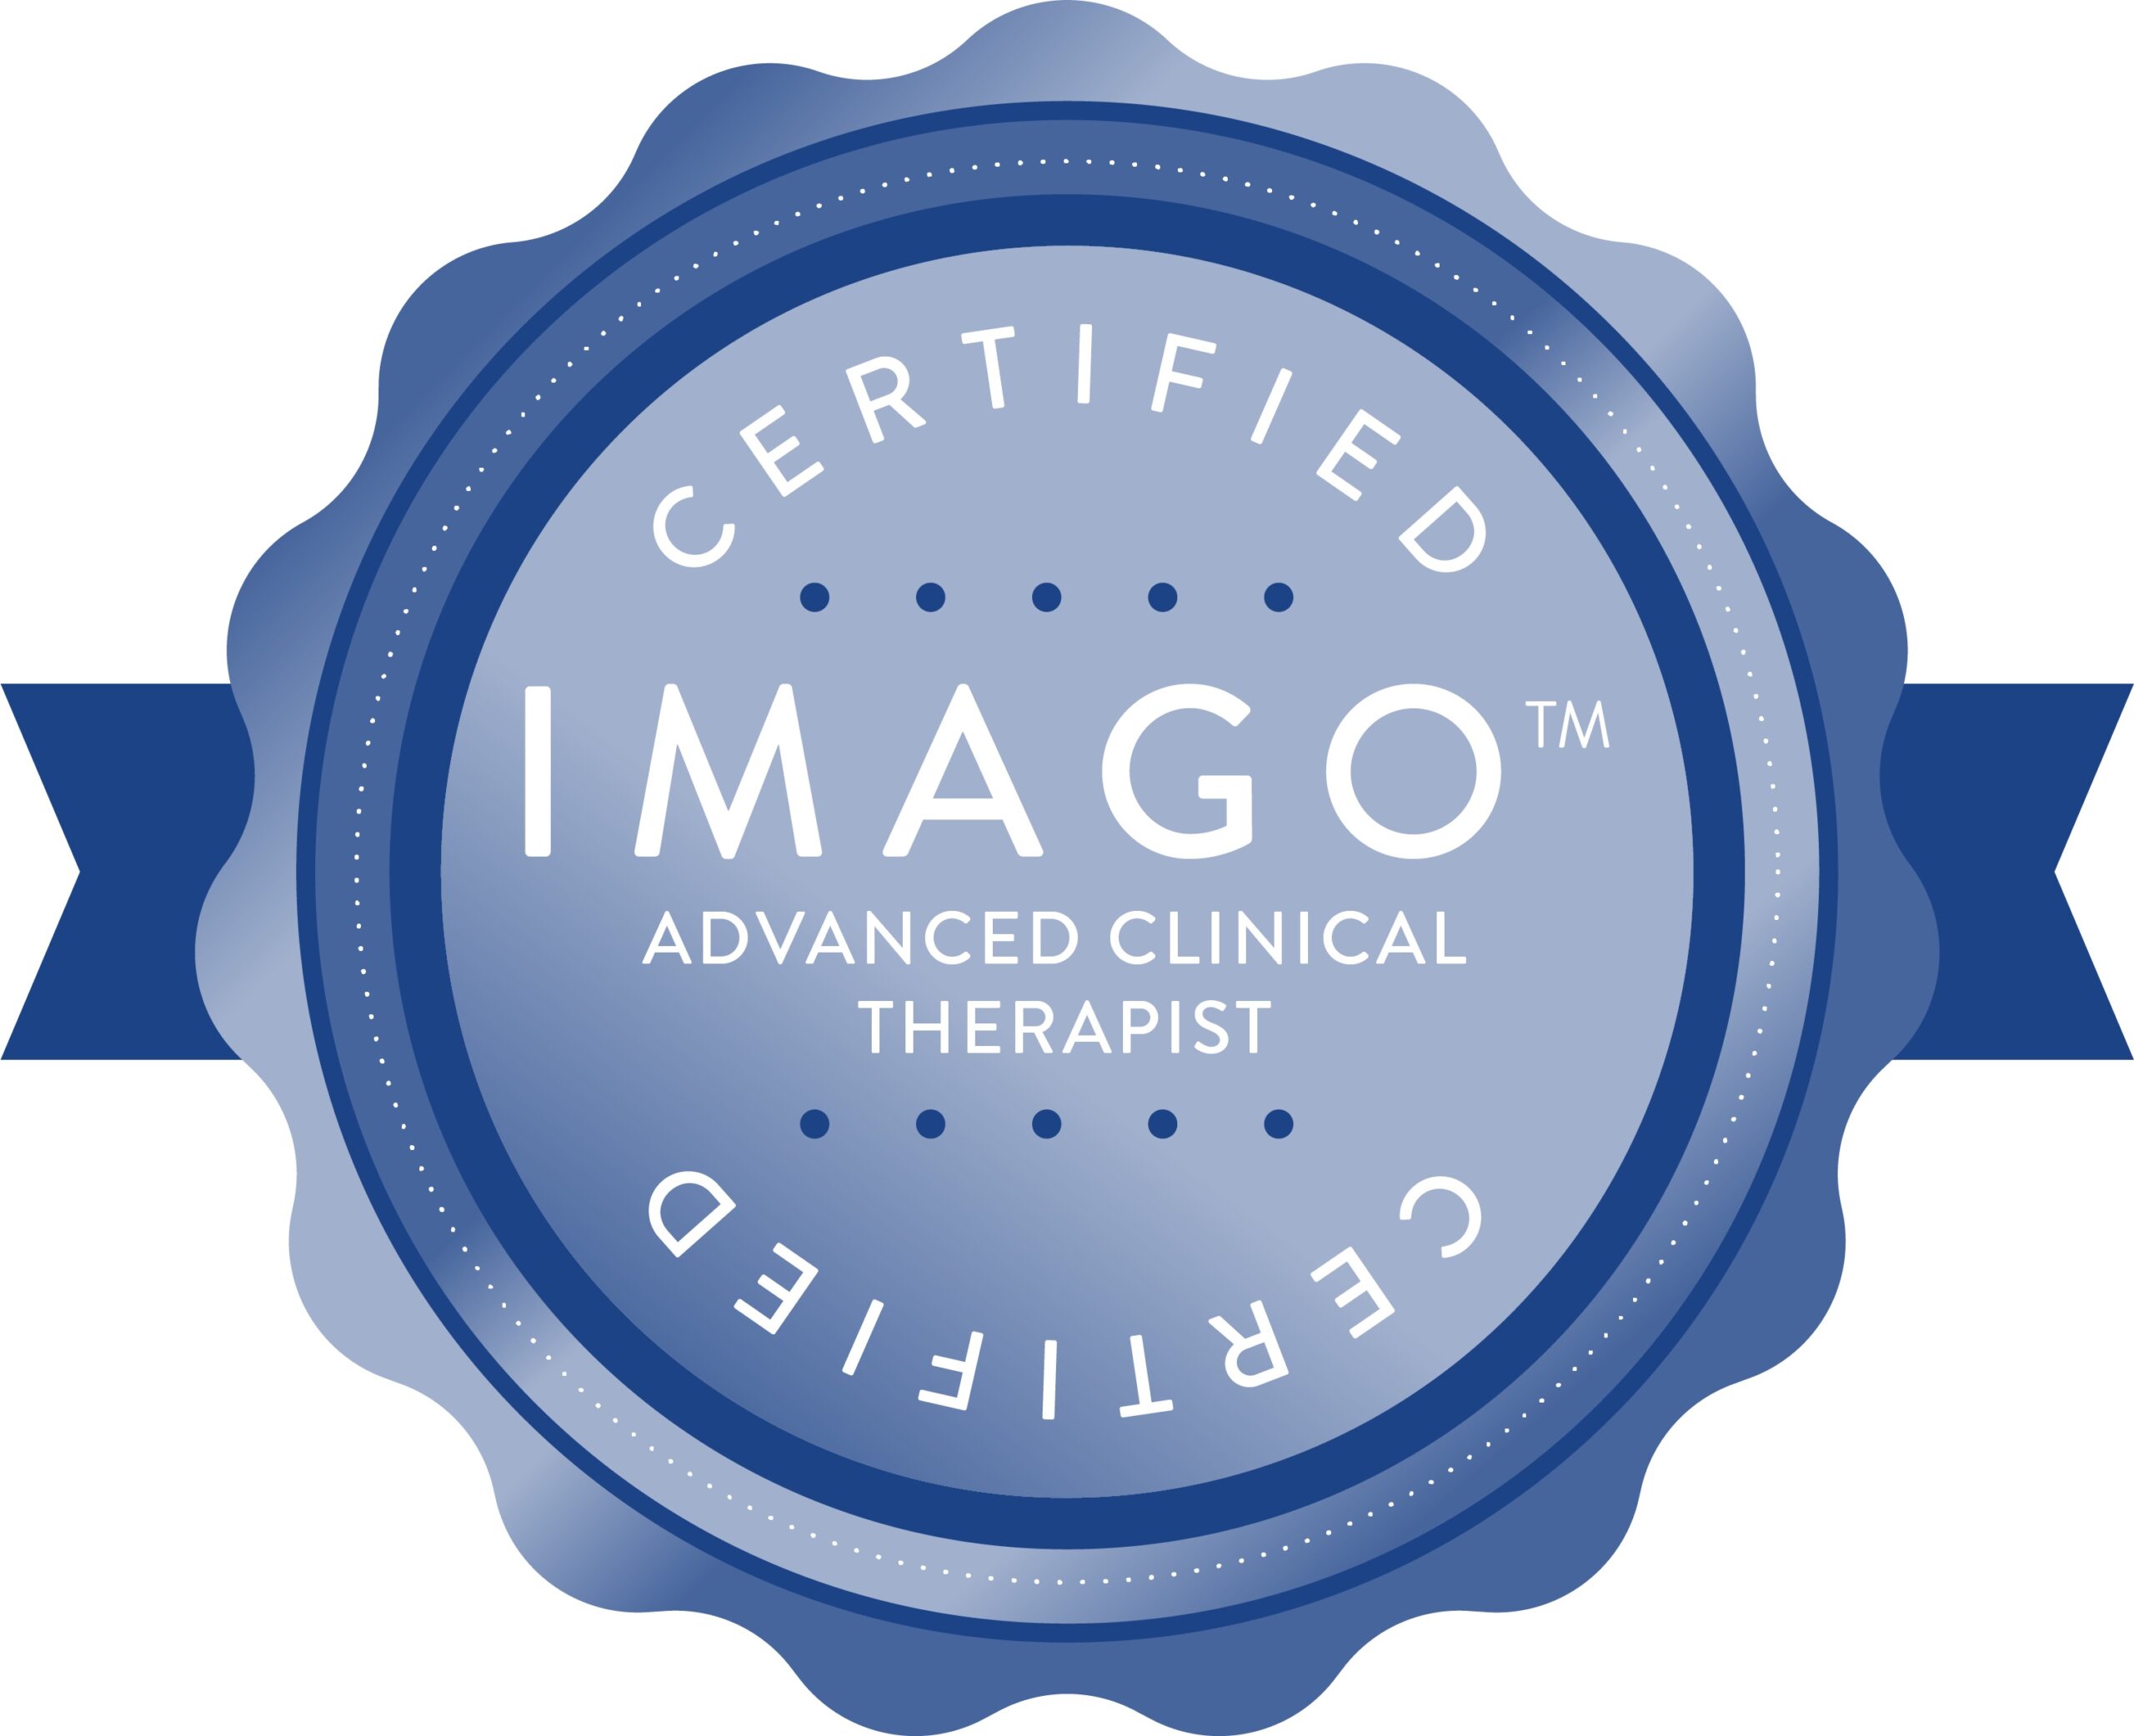 Love Live Imago Advanced Clinical Therapist